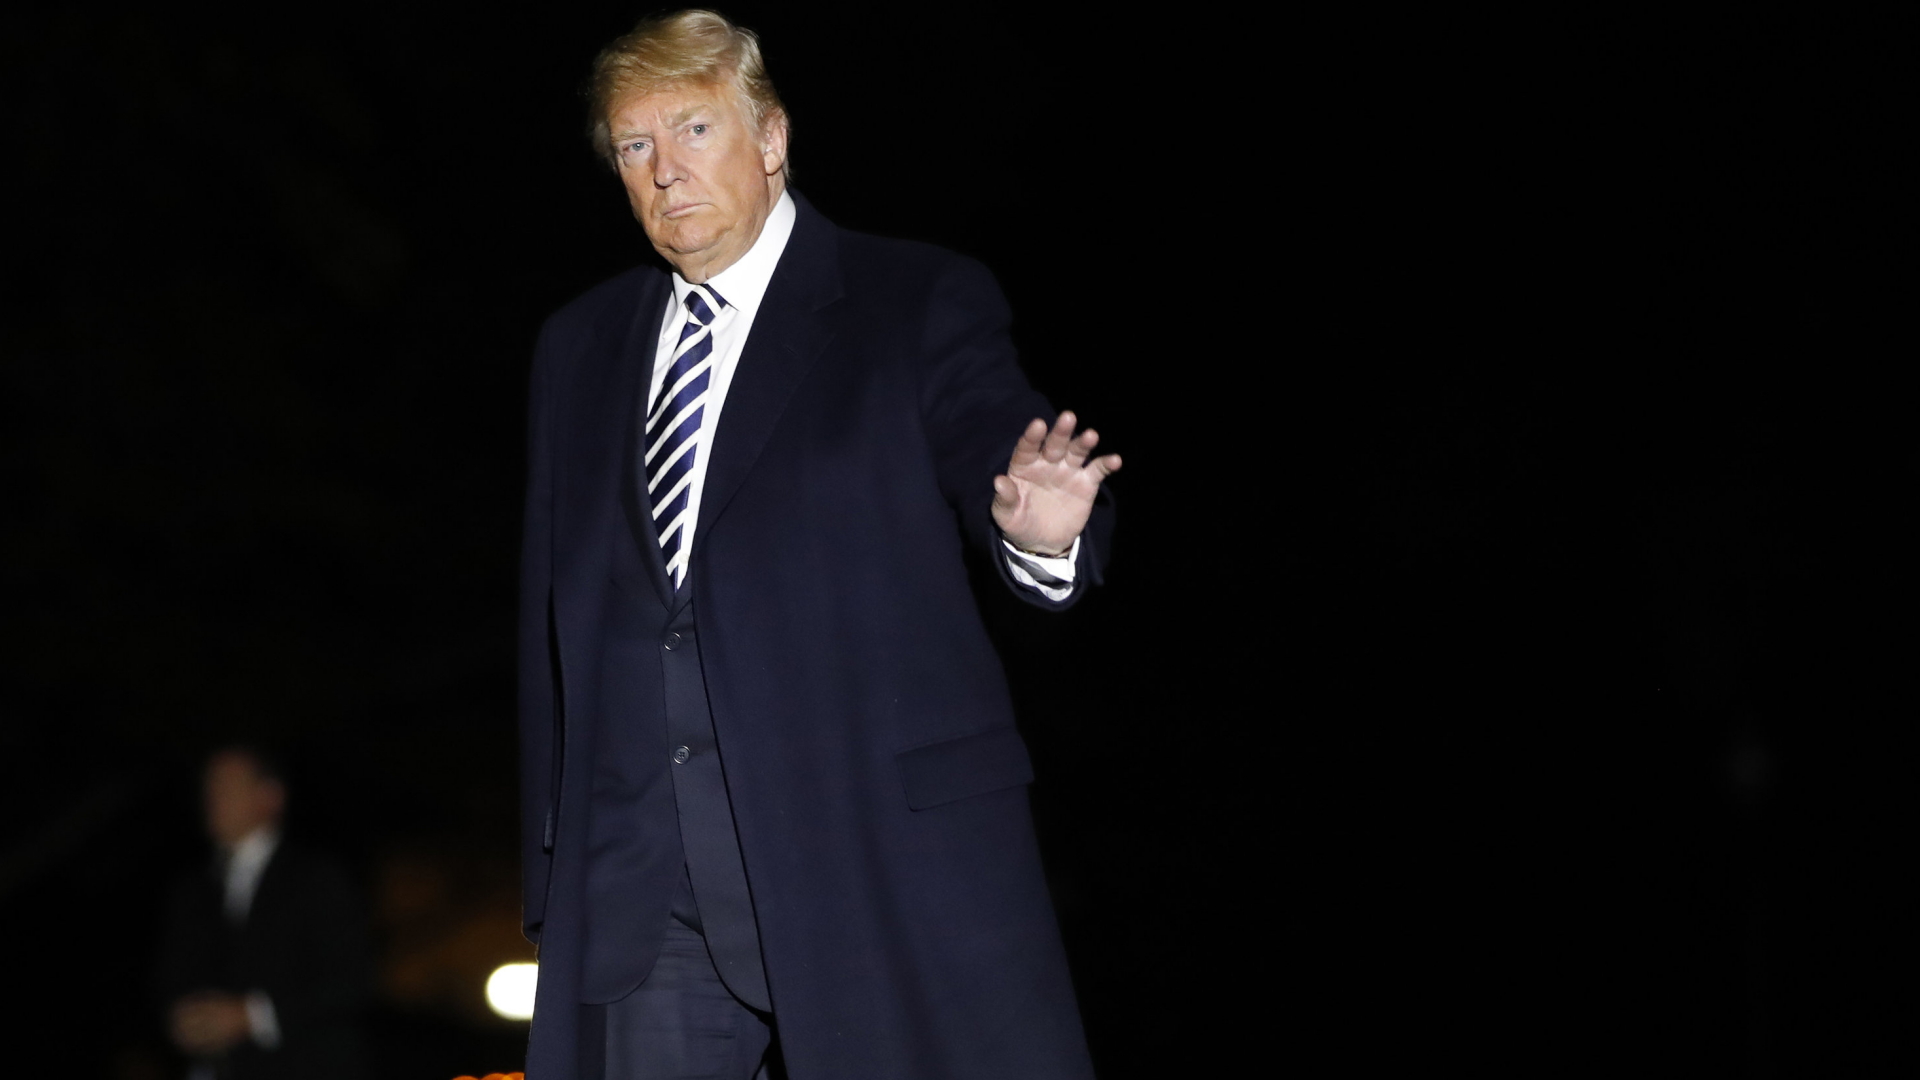 US-Präsident Donald Trump grüßt im Dunkeln | Bildquelle: AP